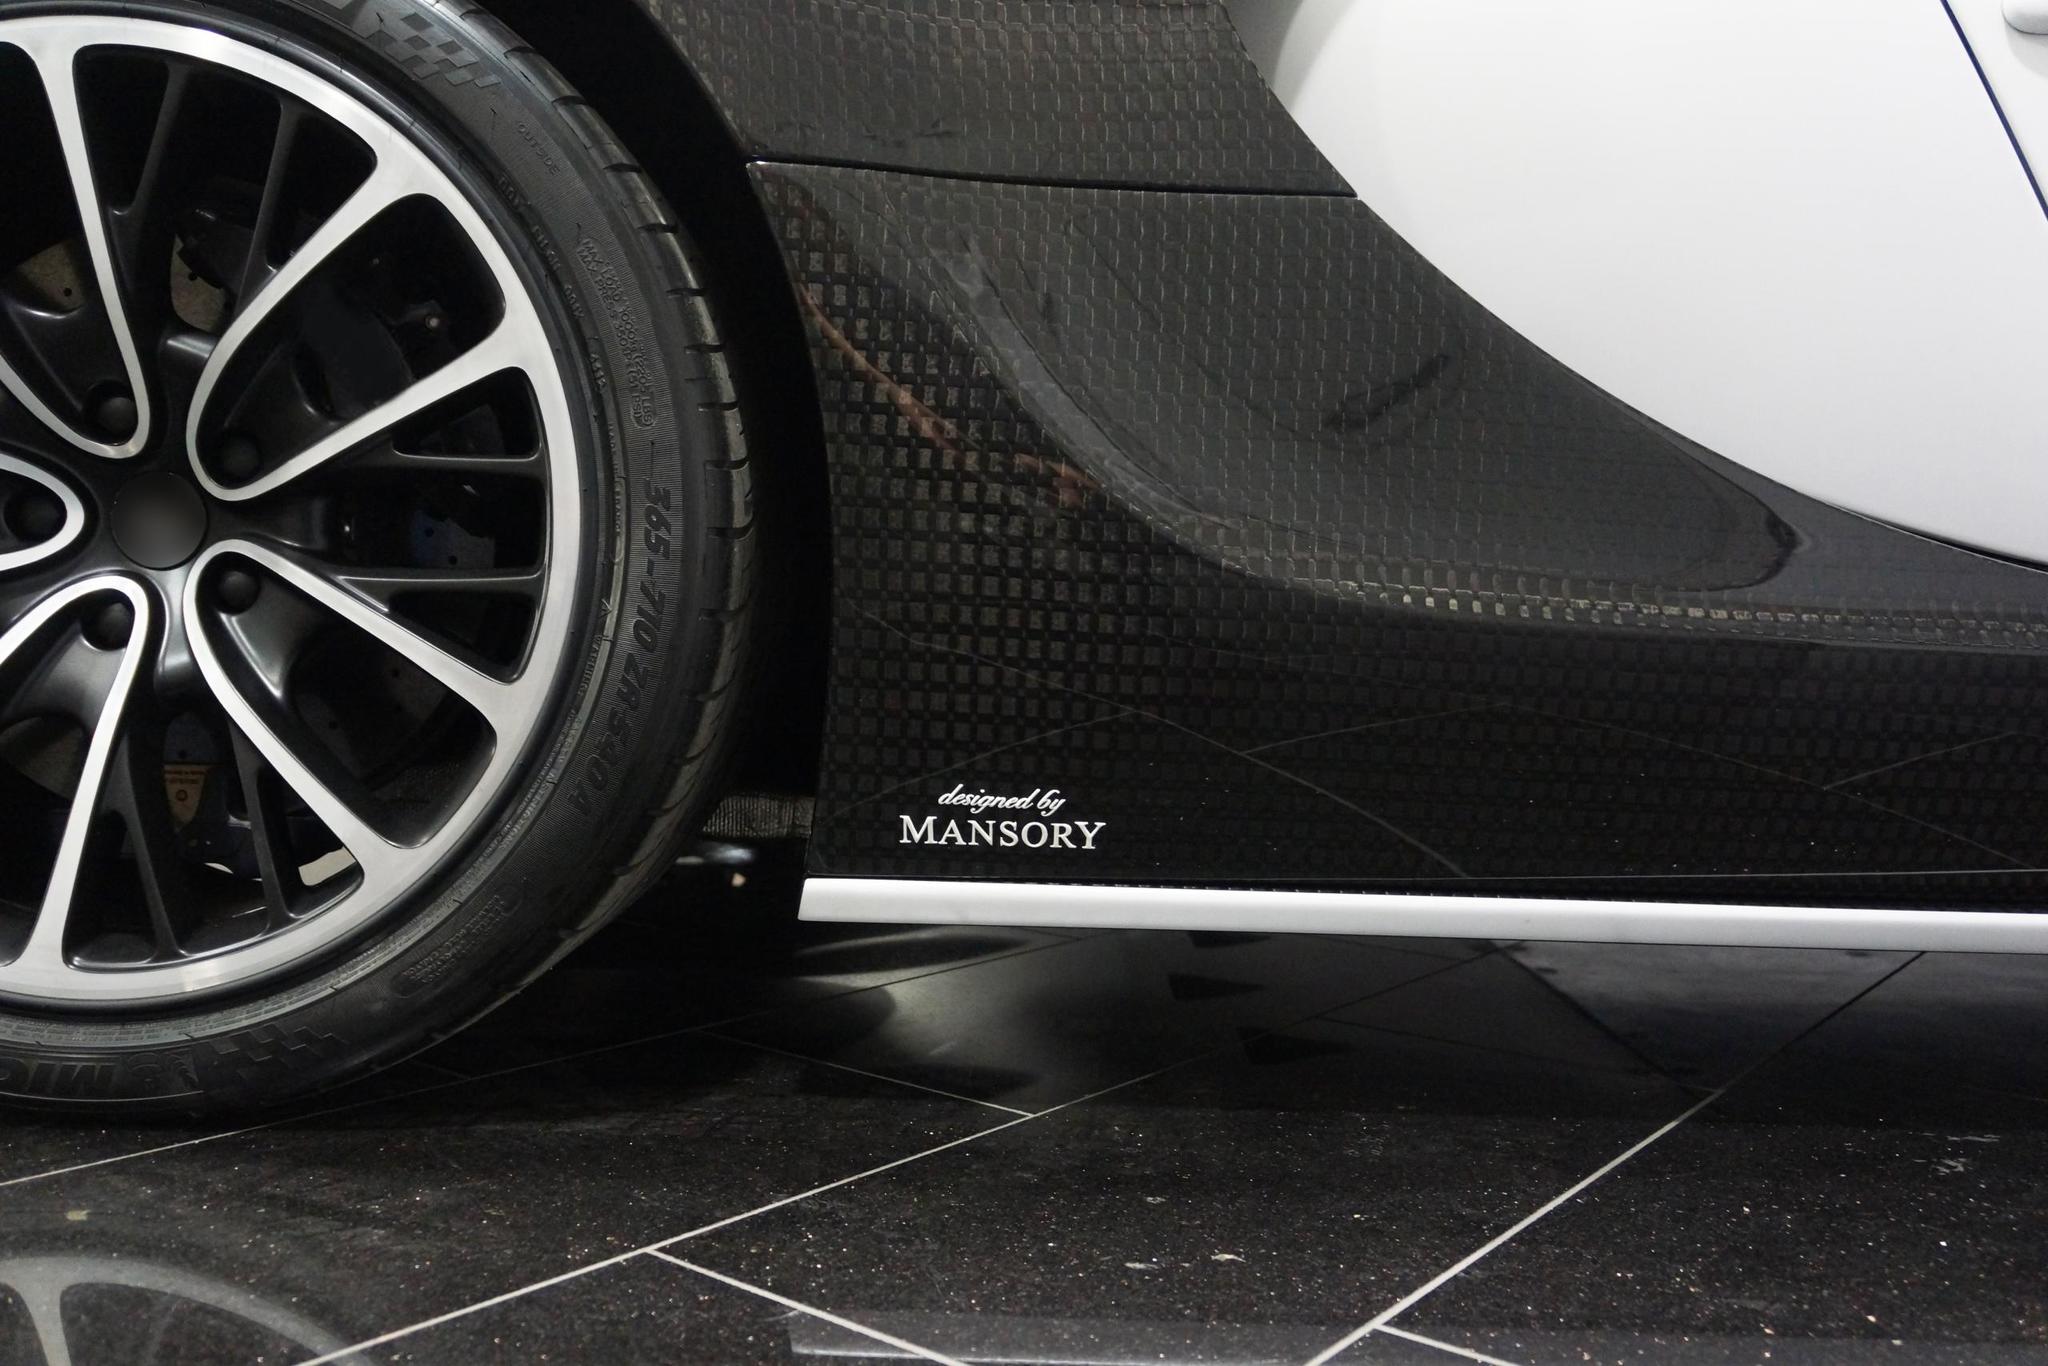 Mansory body kit for Bugatti Veyron latest model